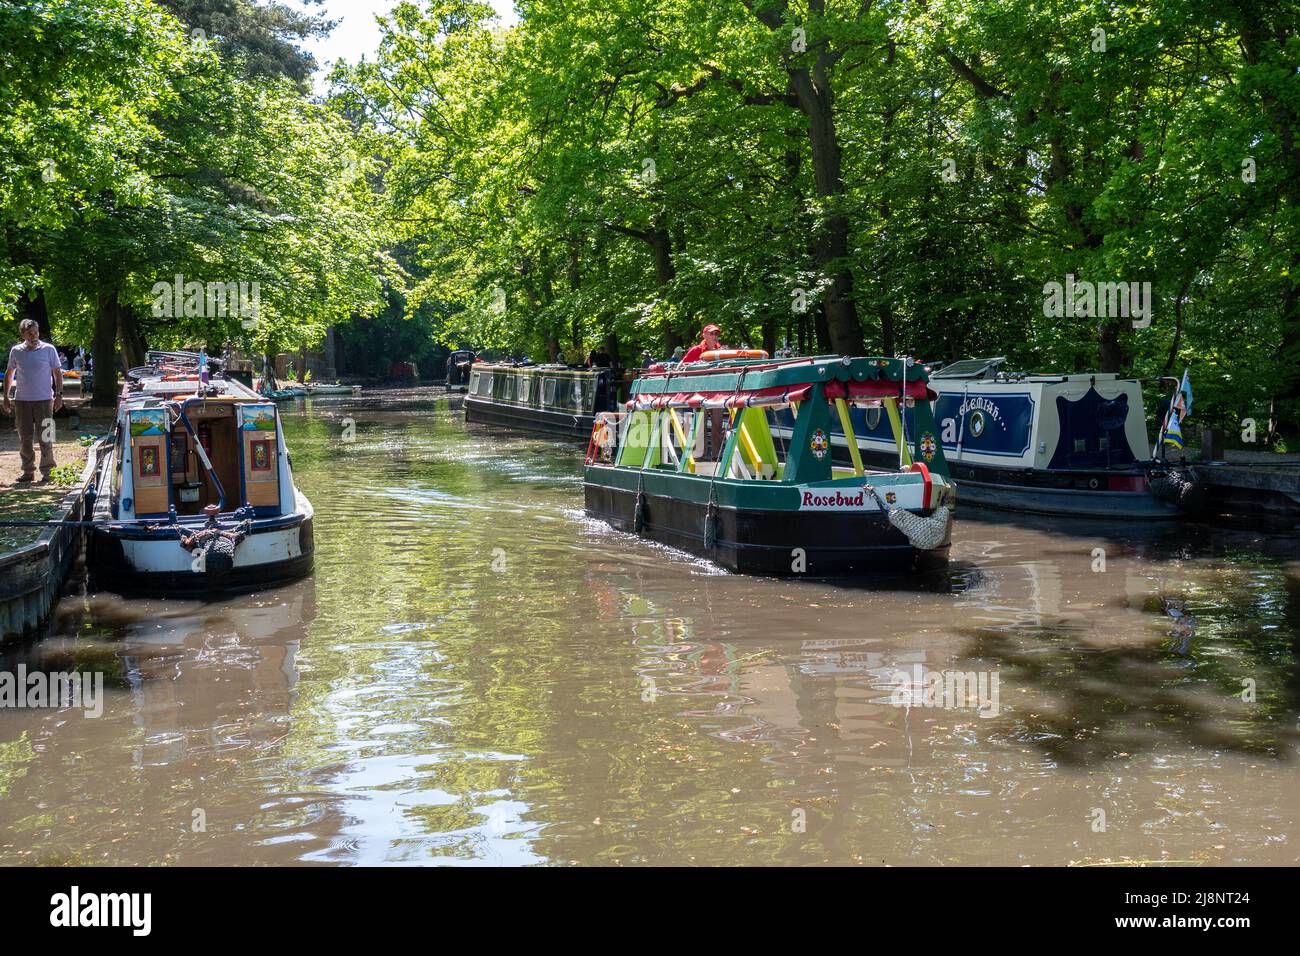 Canal boats on the Basingstoke Canal near Mytchett, part of the Surrey Heath Show, run by the Basingstoke Canal Society, May 2022 Stock Photo